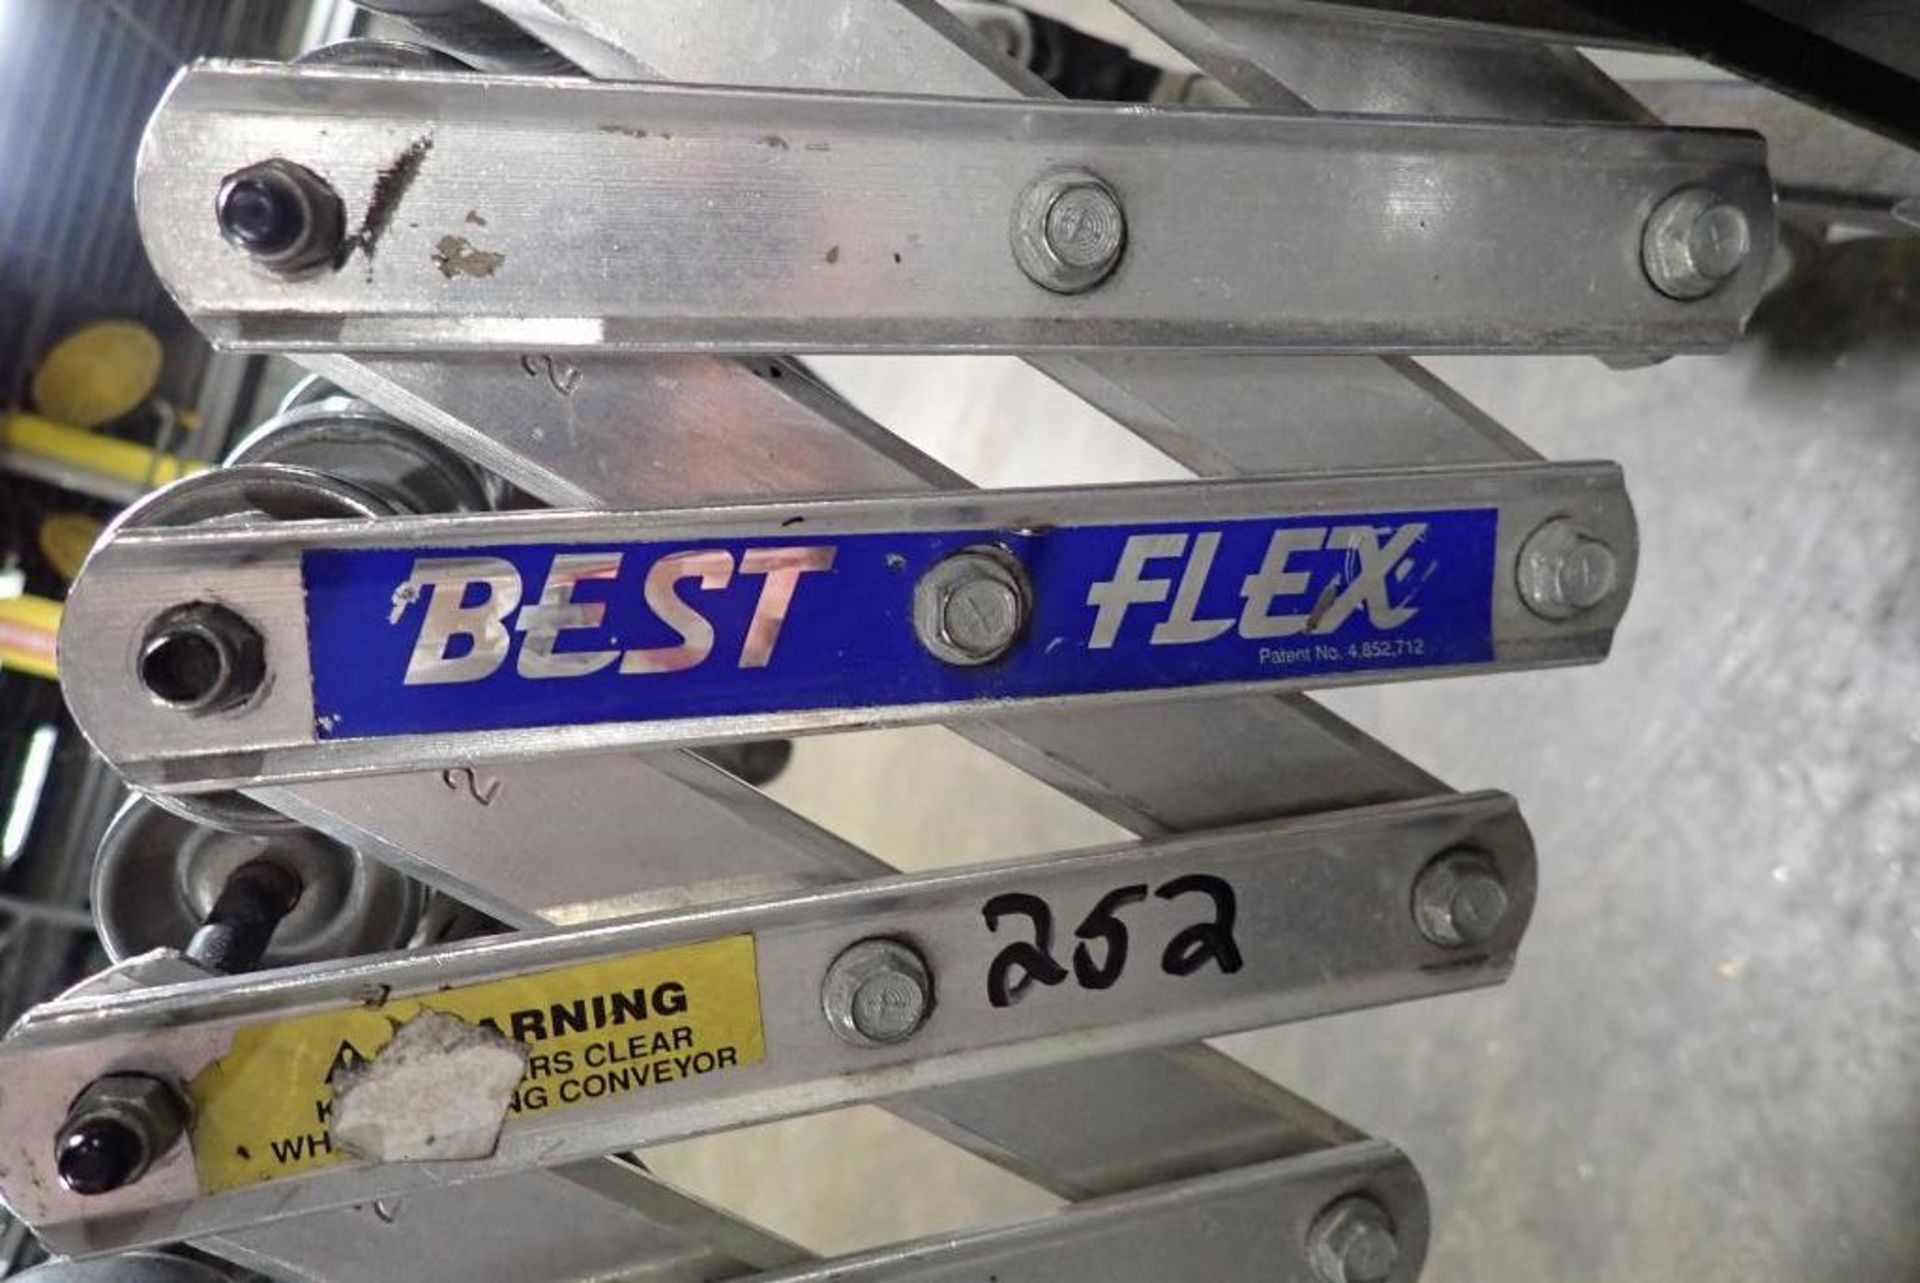 Bestflex flexible skate conveyor - Image 4 of 4